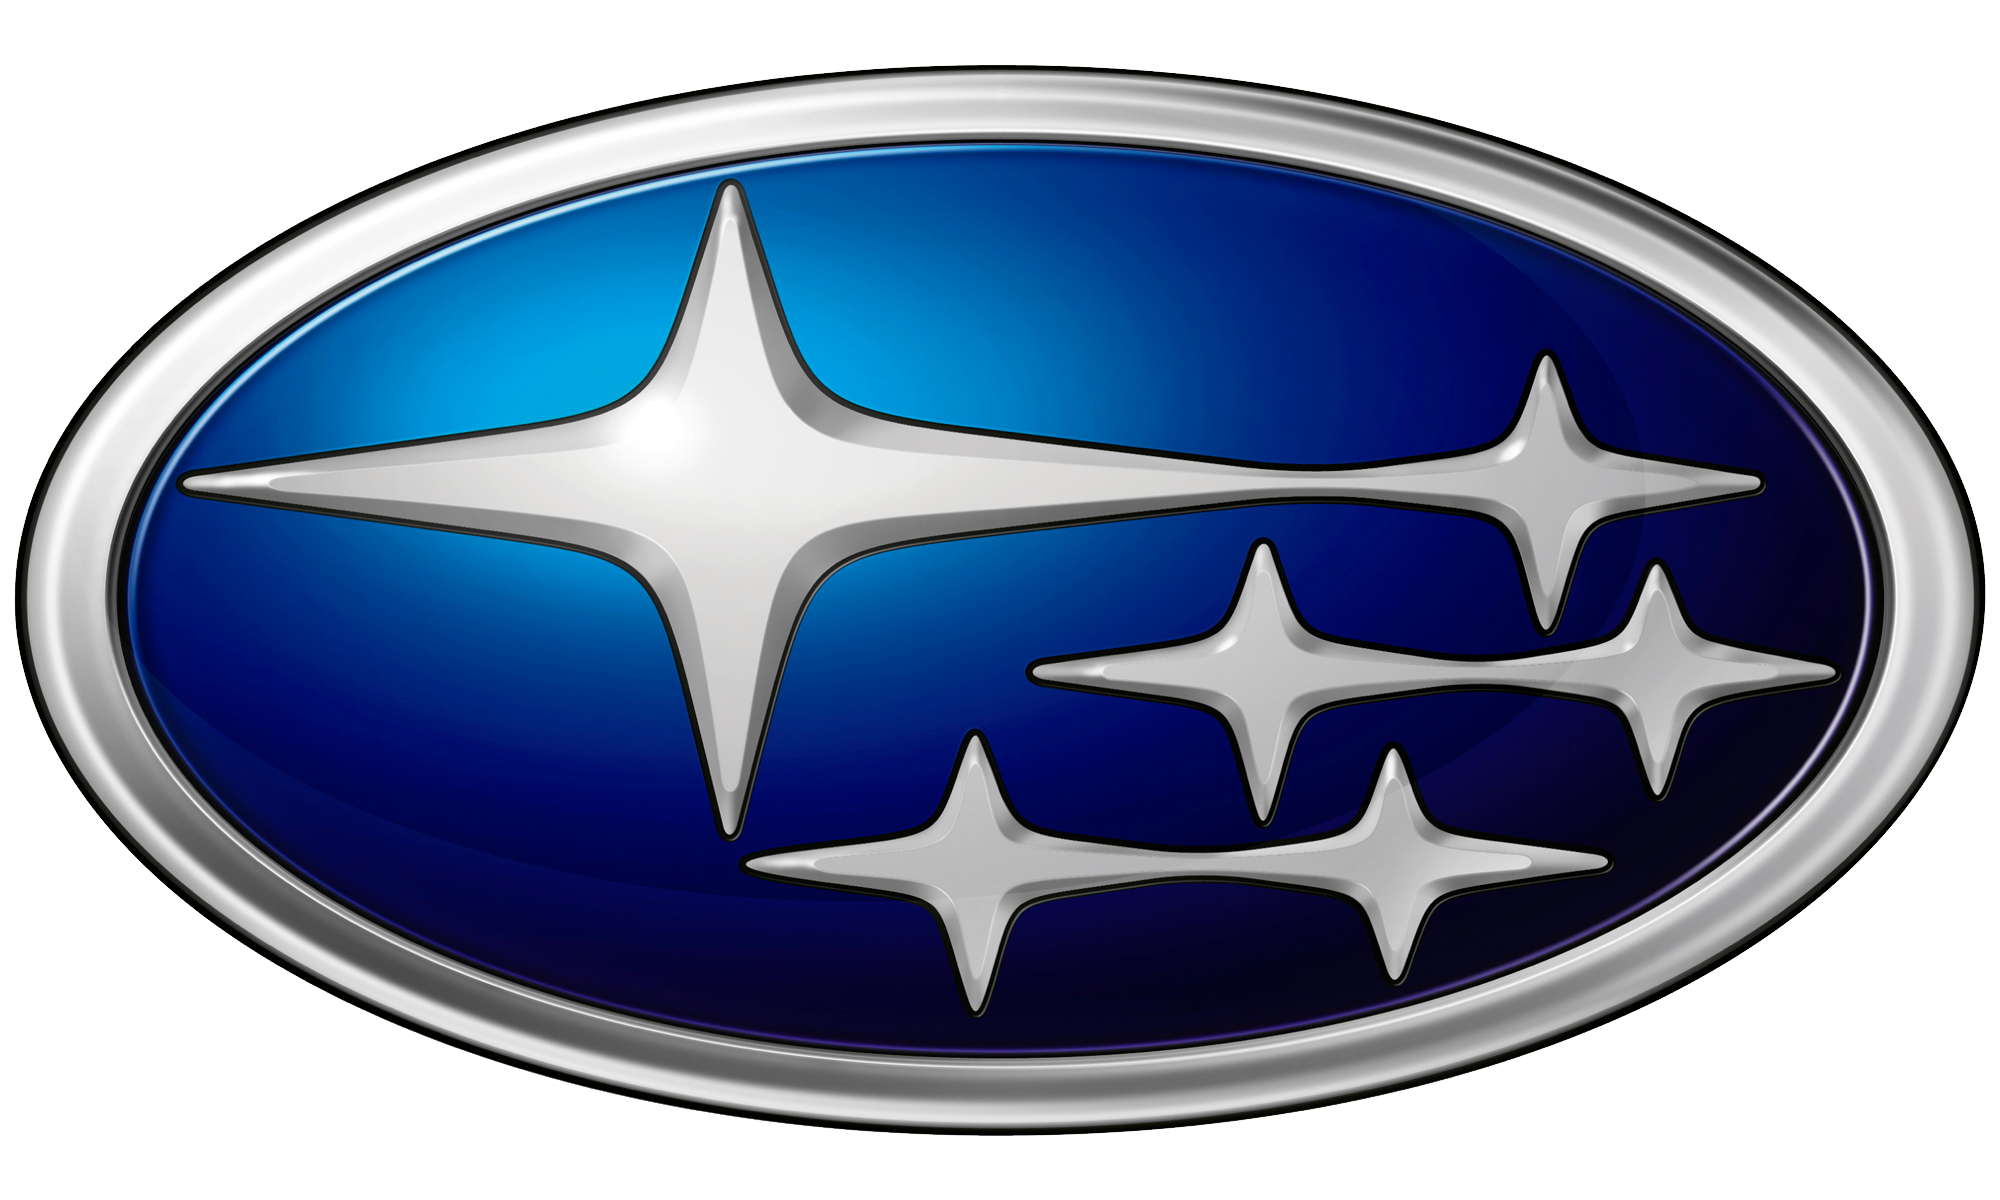 Subaru Car Logo Png Brand Image - Subaru, Transparent background PNG HD thumbnail